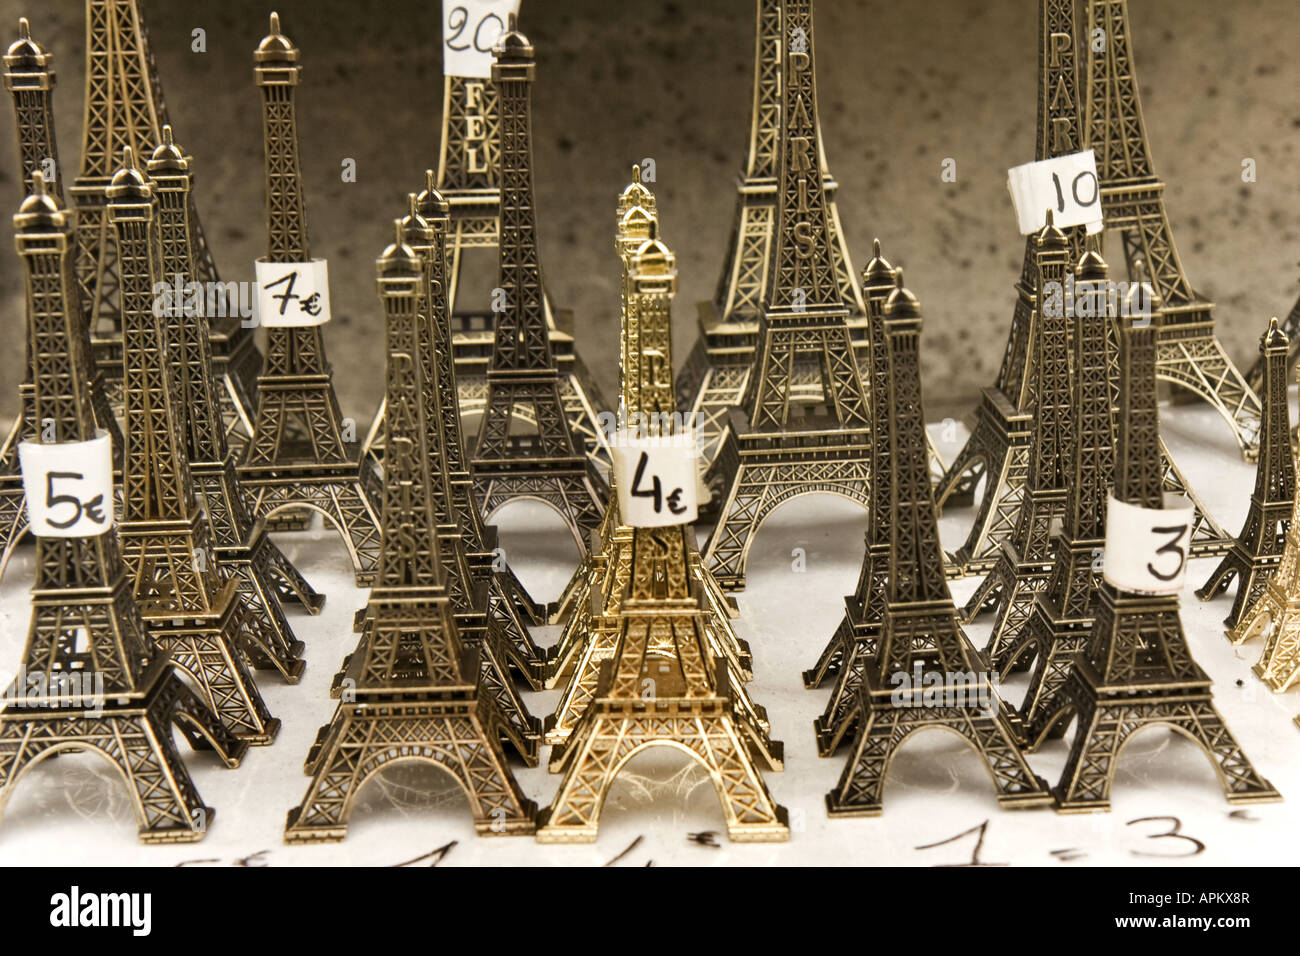 selling of Eiffel Tower souvenirs, France, Paris Stock Photo